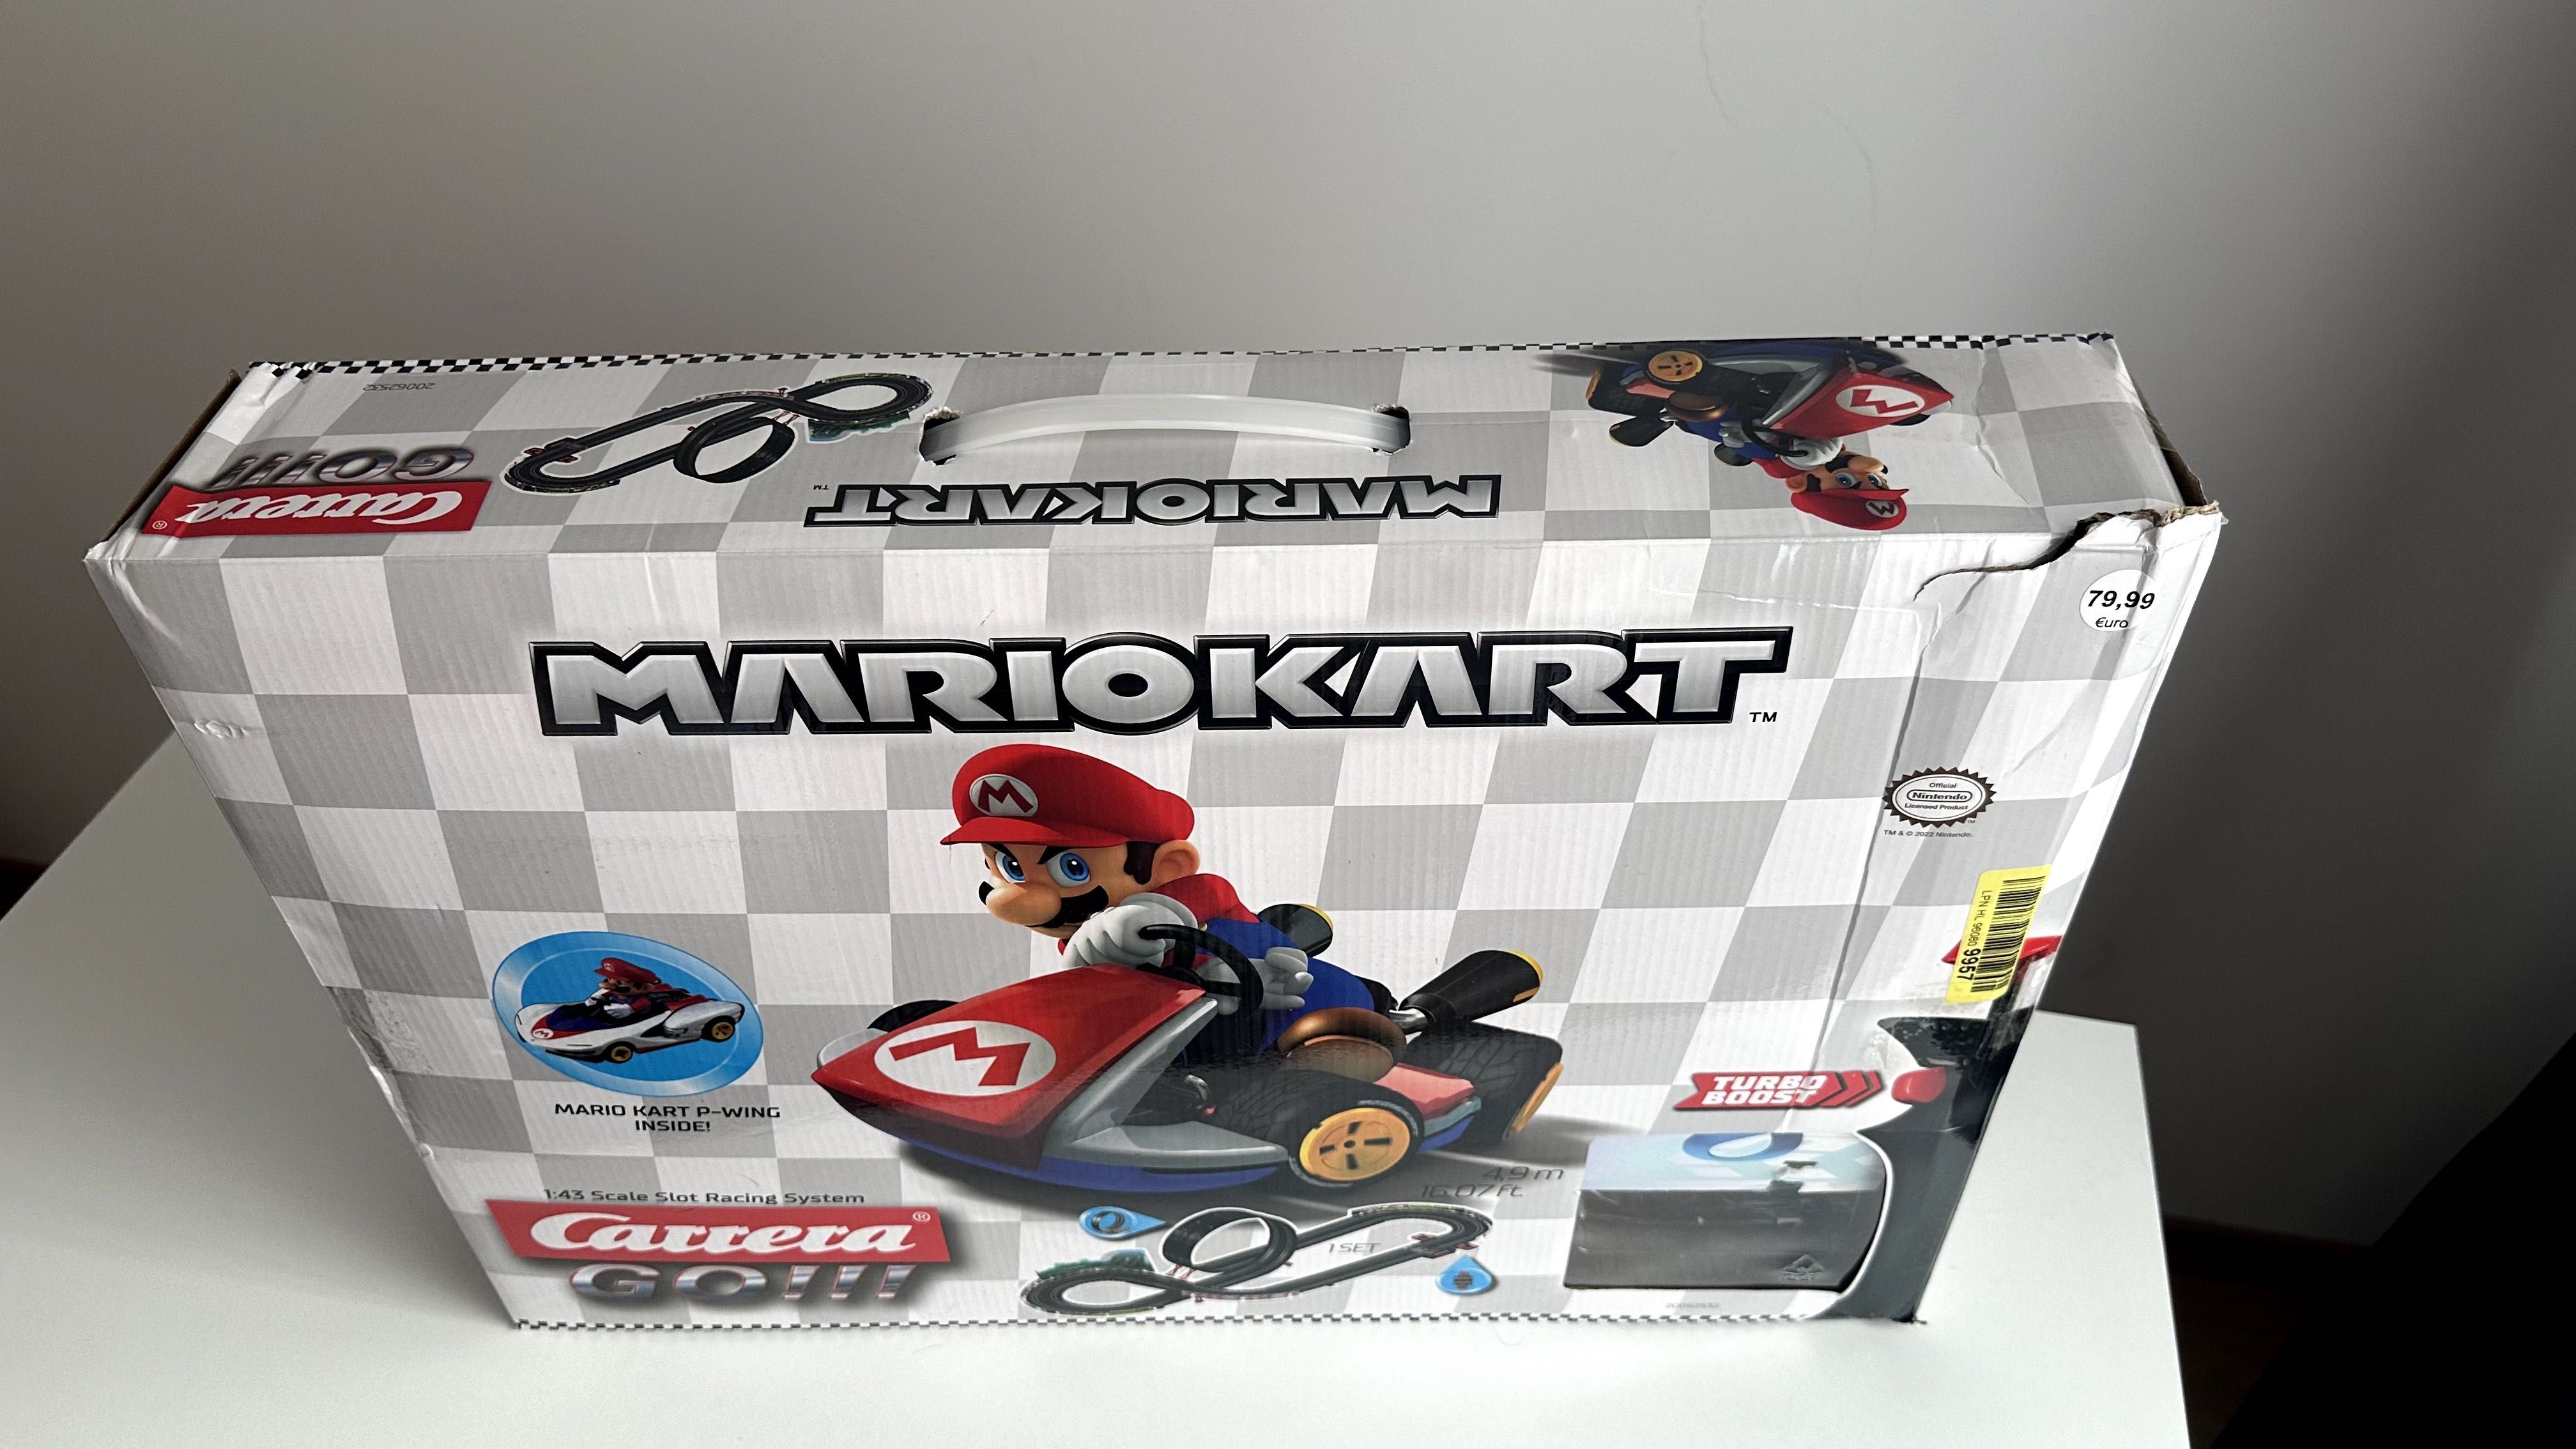 Tor GO Nintendo Mario Kart - P-Wing 4,9m 62532 Carrera